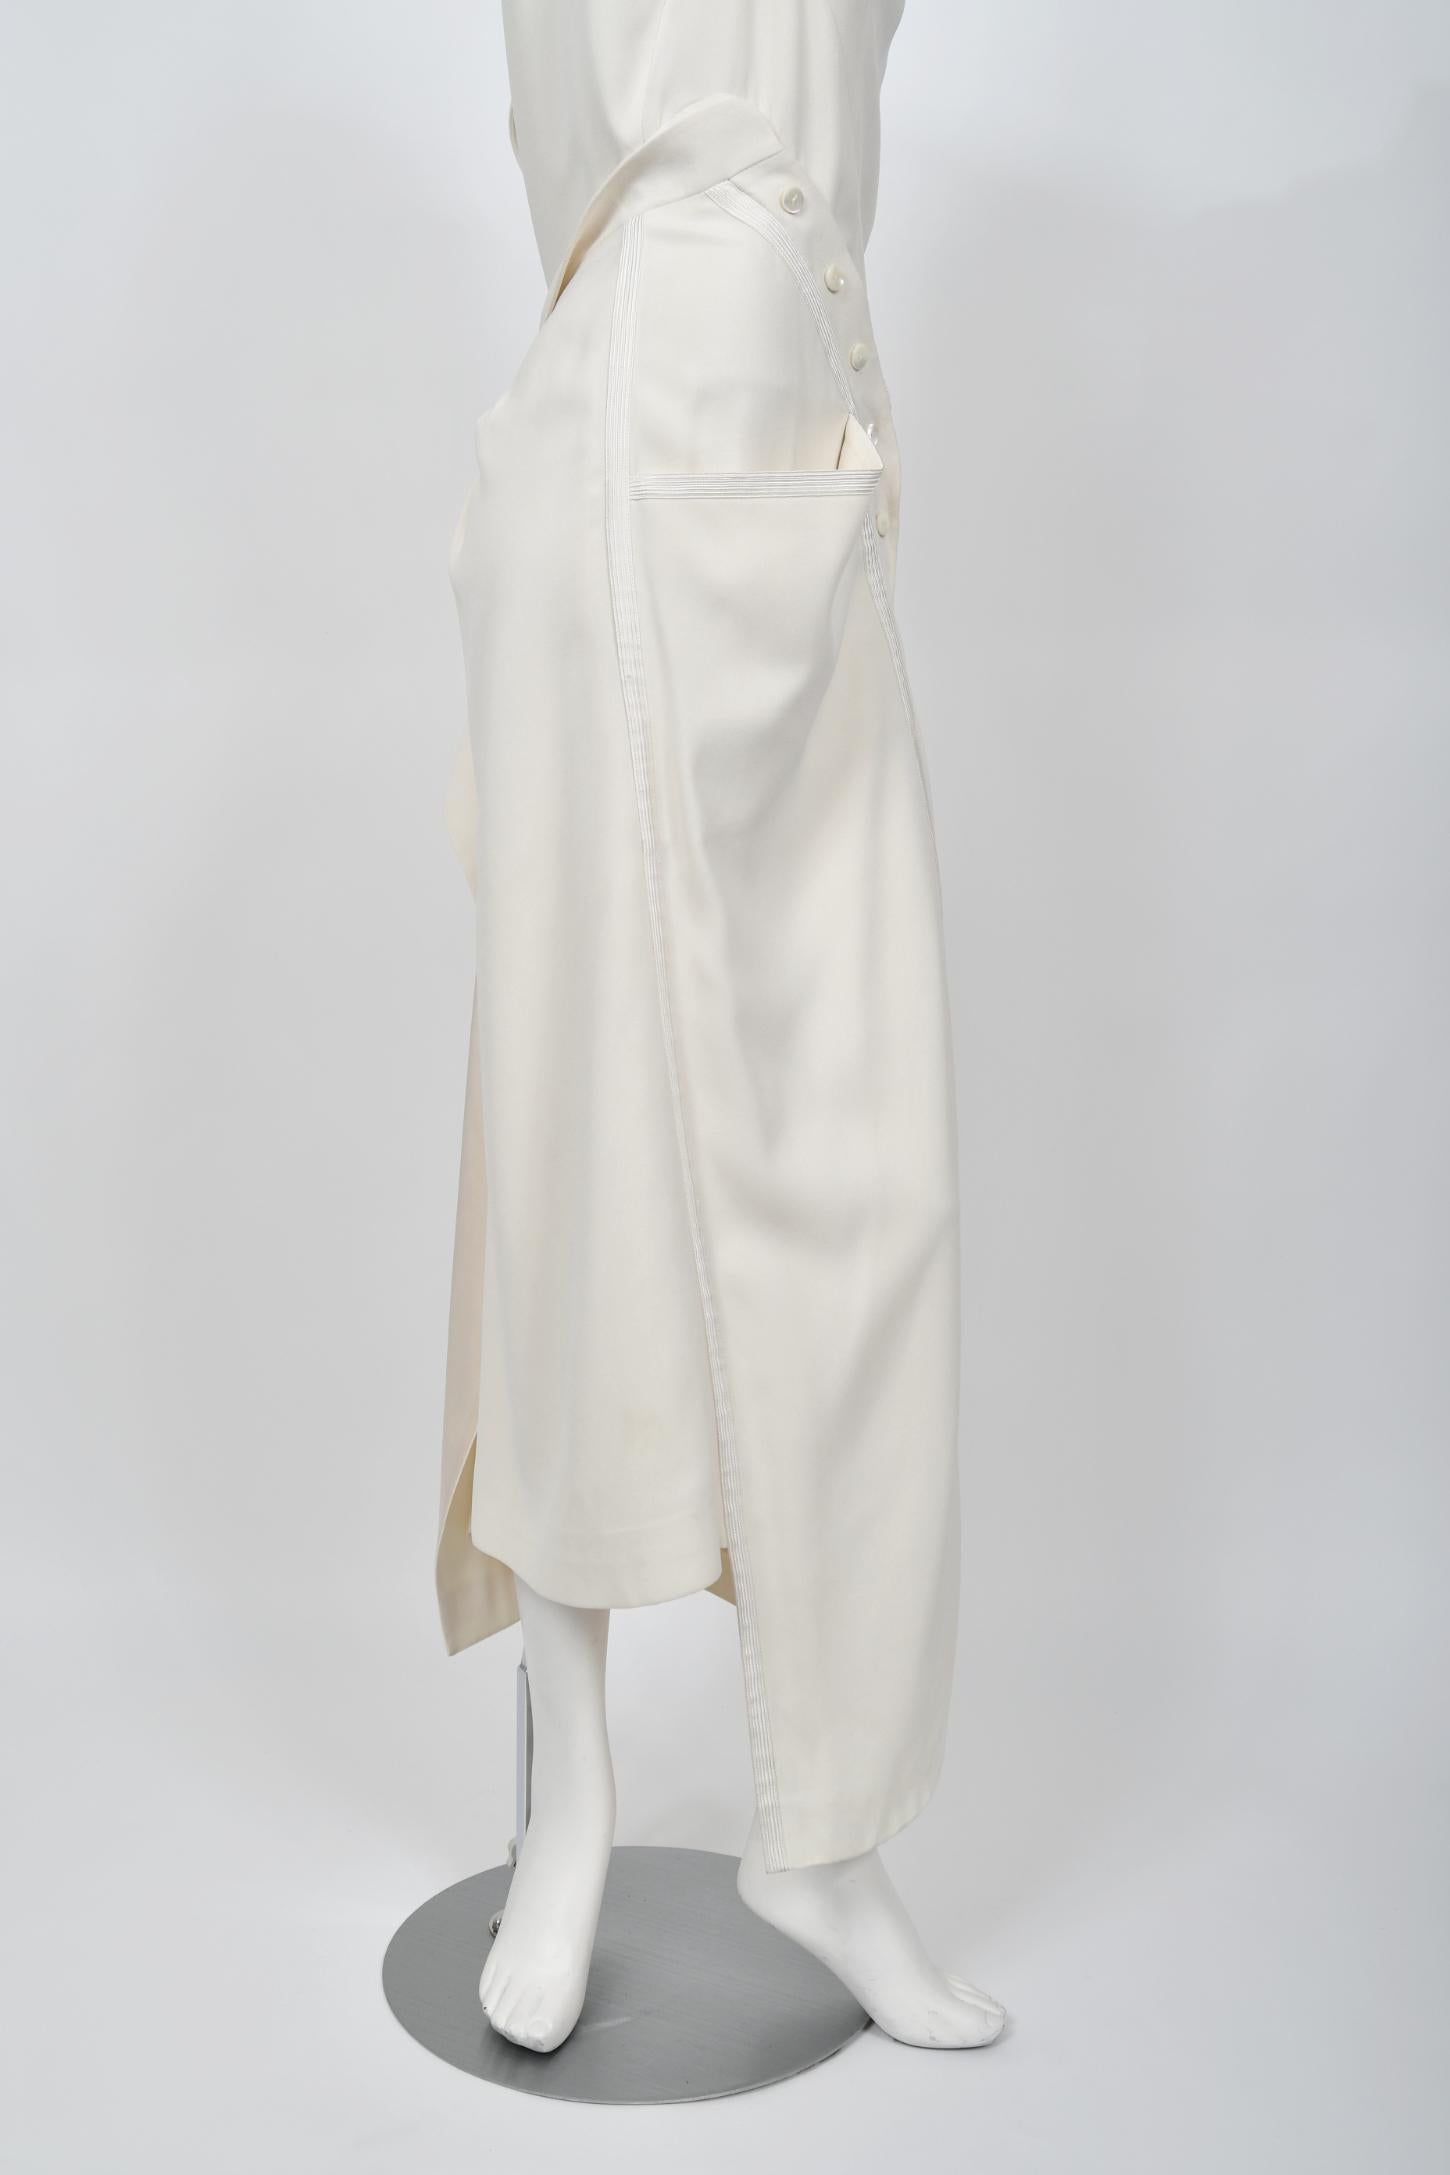 2000 Christian Dior by John Galliano Ivory Crepe Cut-Out Asymmetric Draped Dress 13